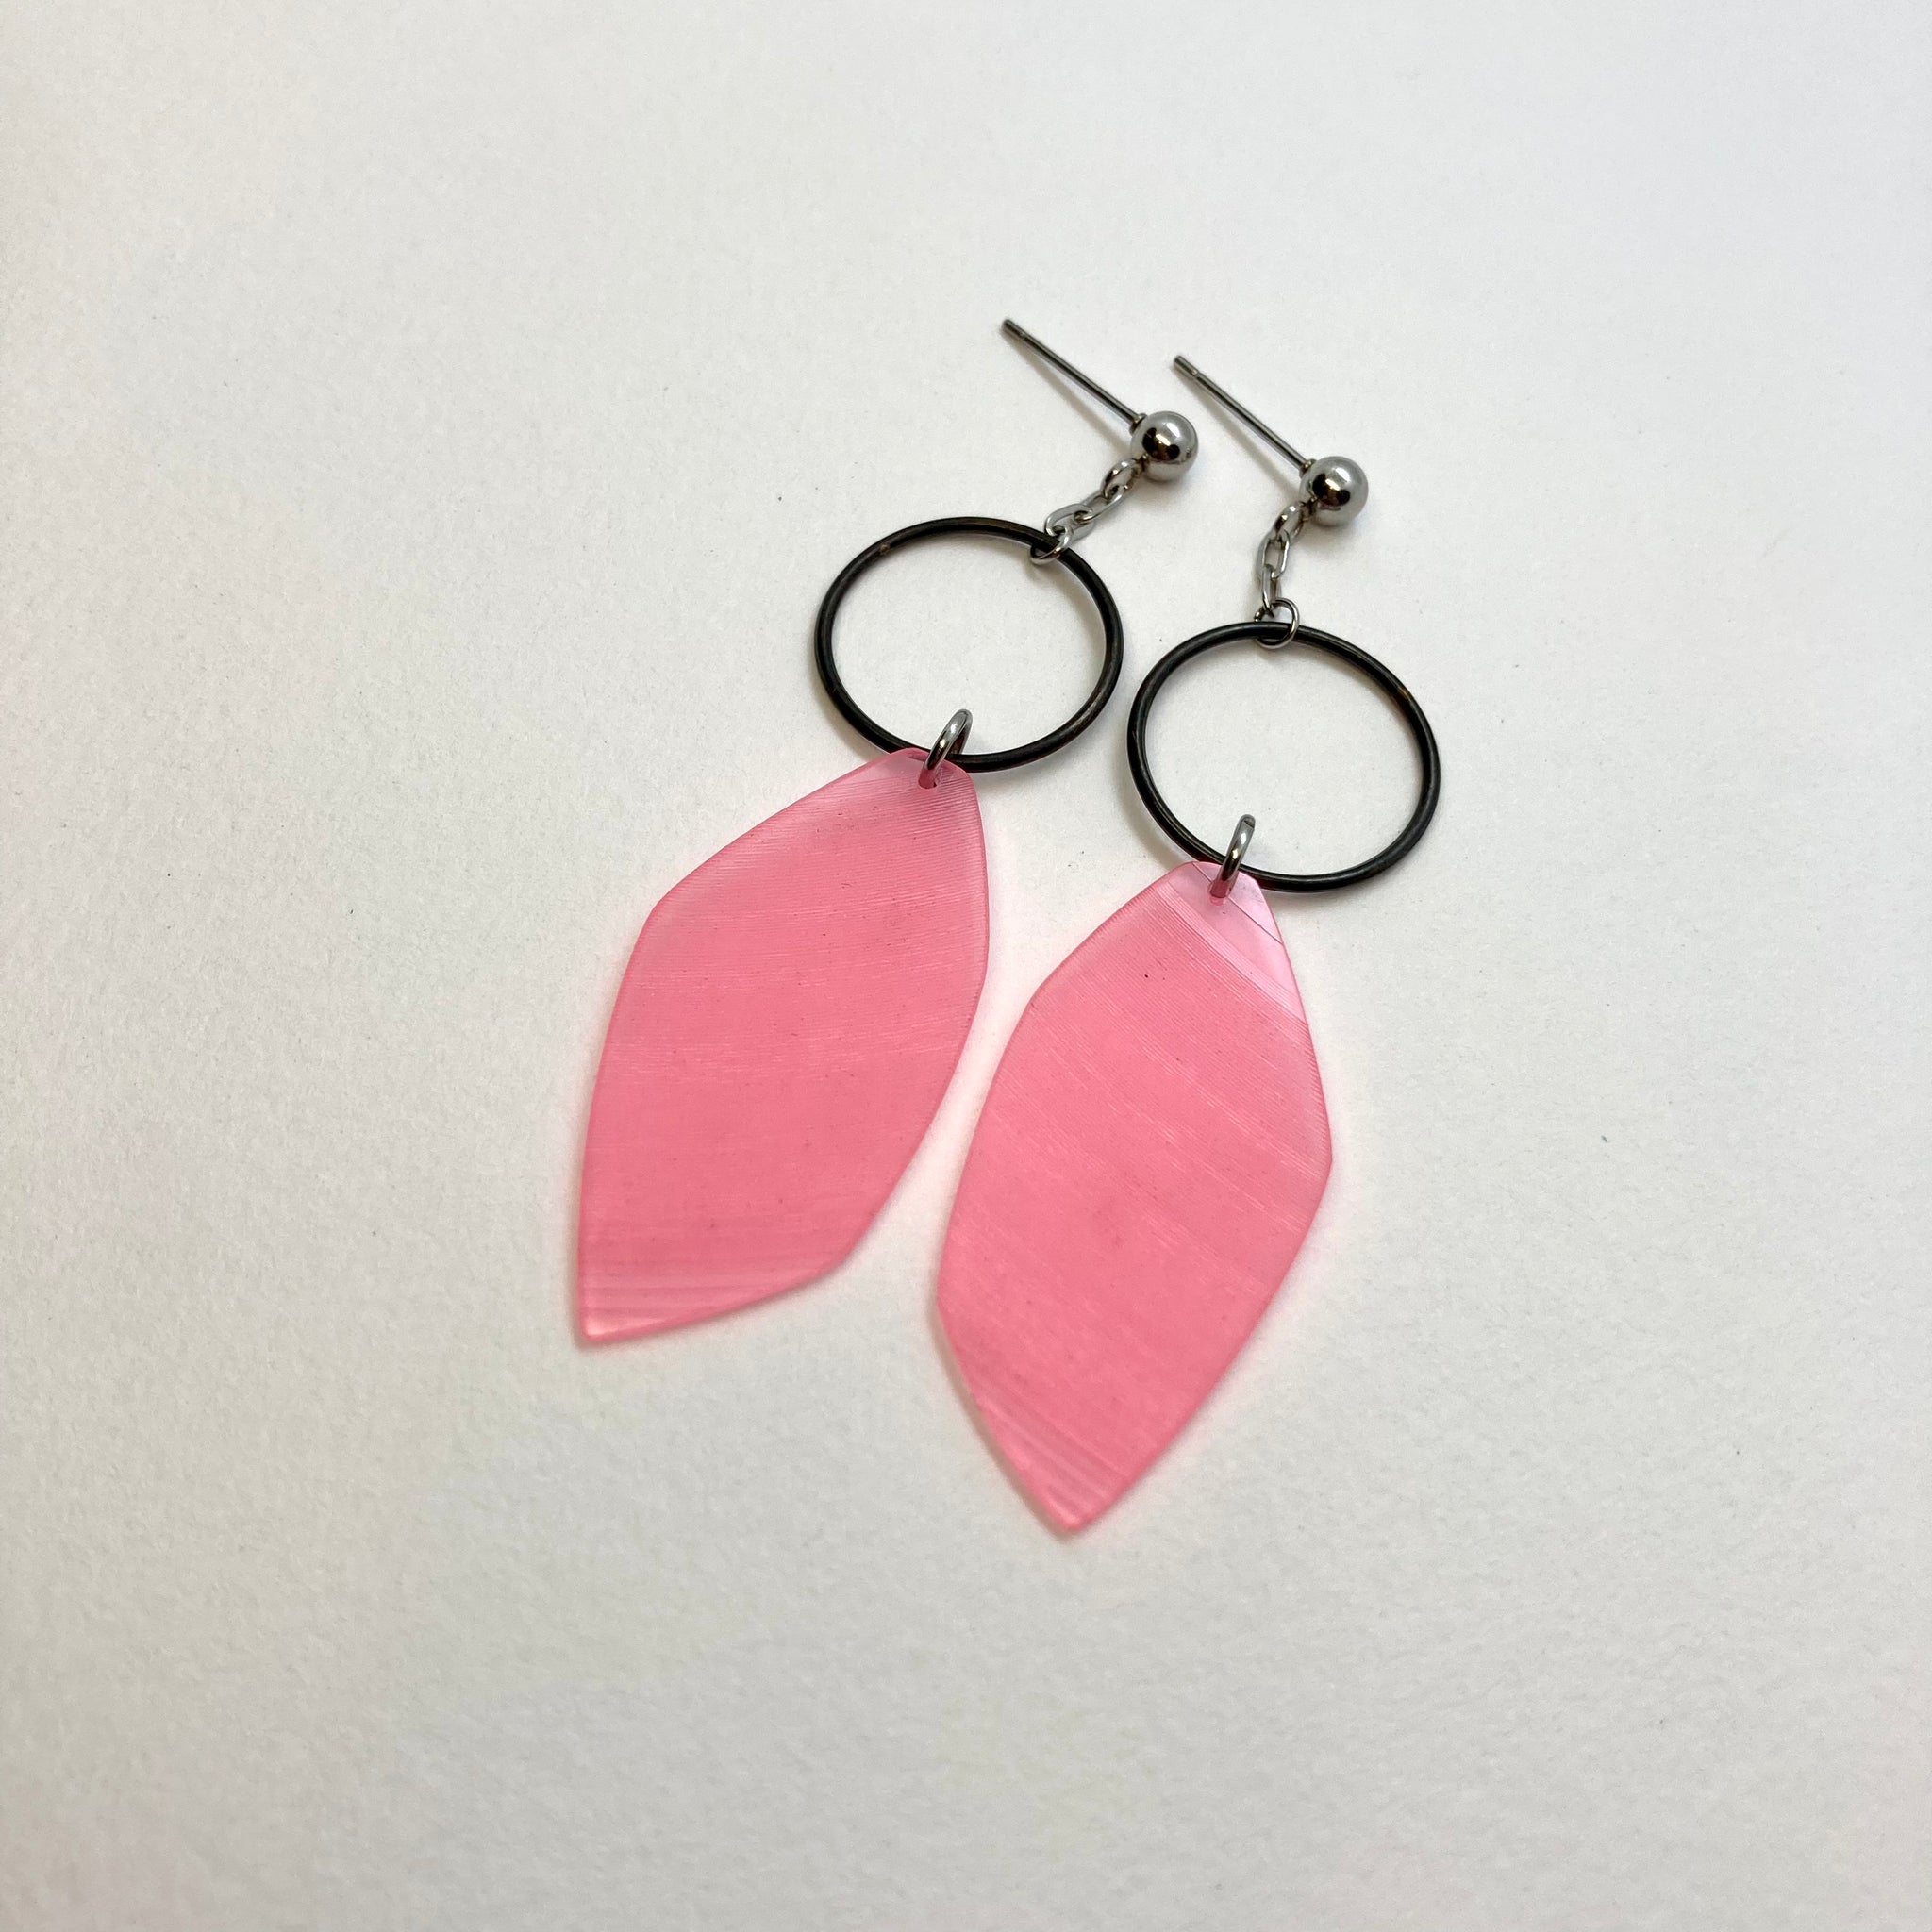 Pink copper ring earrings